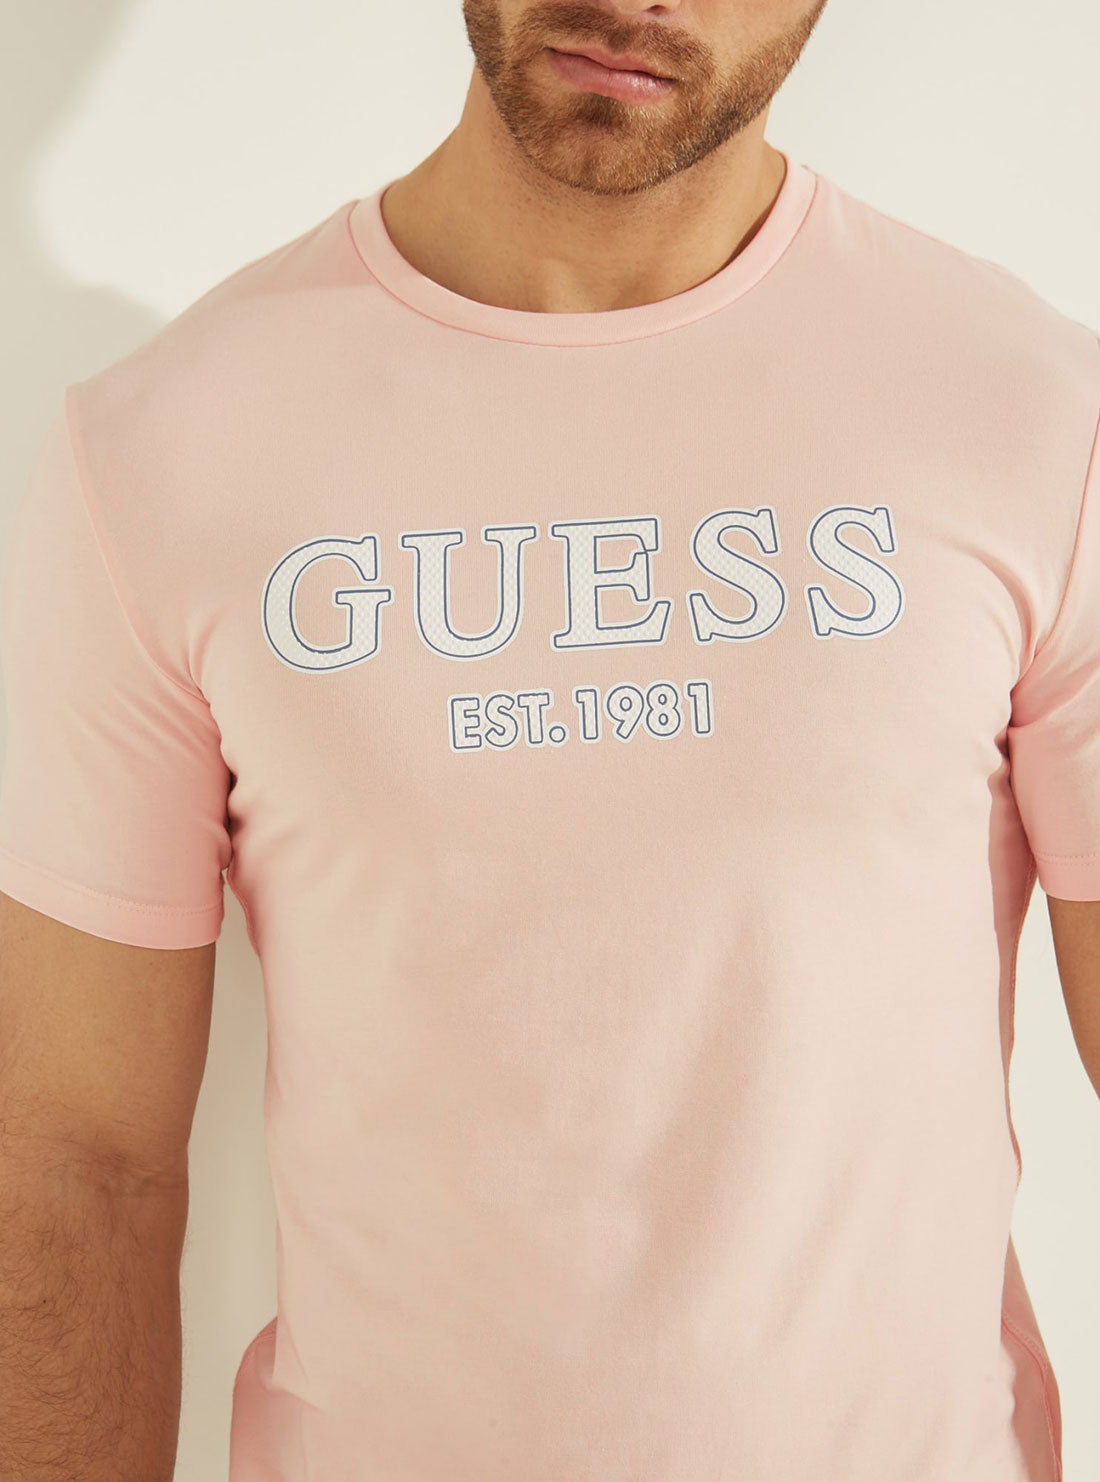 GUESS Mens Eco Blush Pink Point Logo T-Shirt M2GI21J1311 Detail View